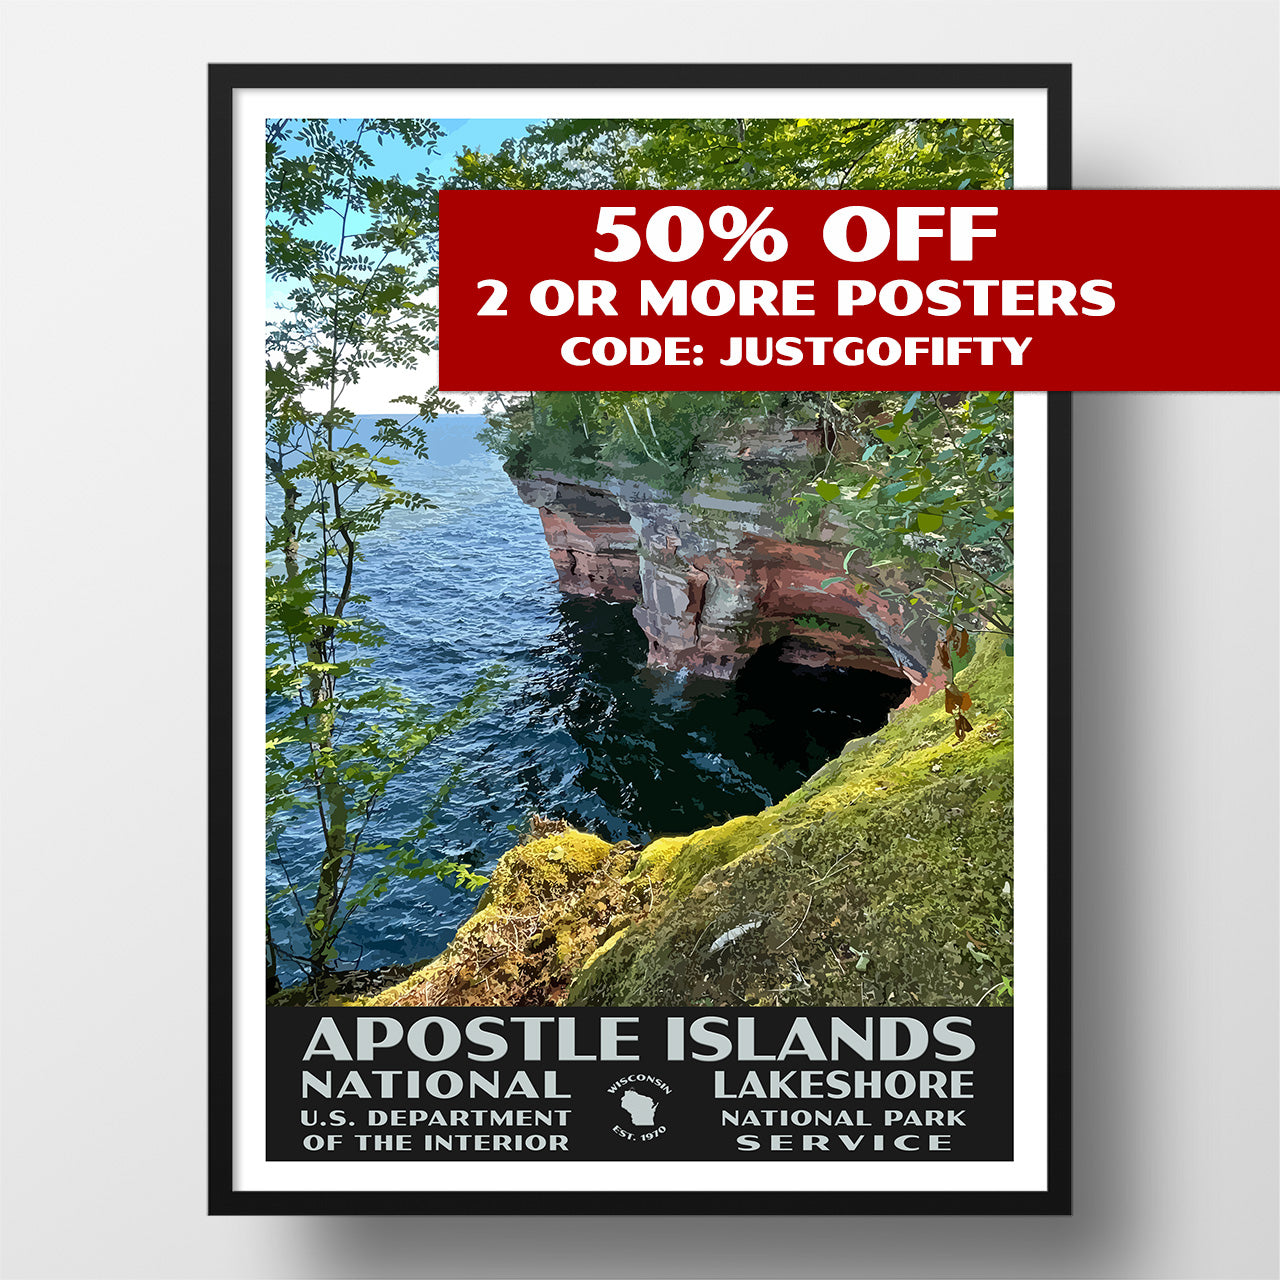 Apostle Islands National Lakeshore poster